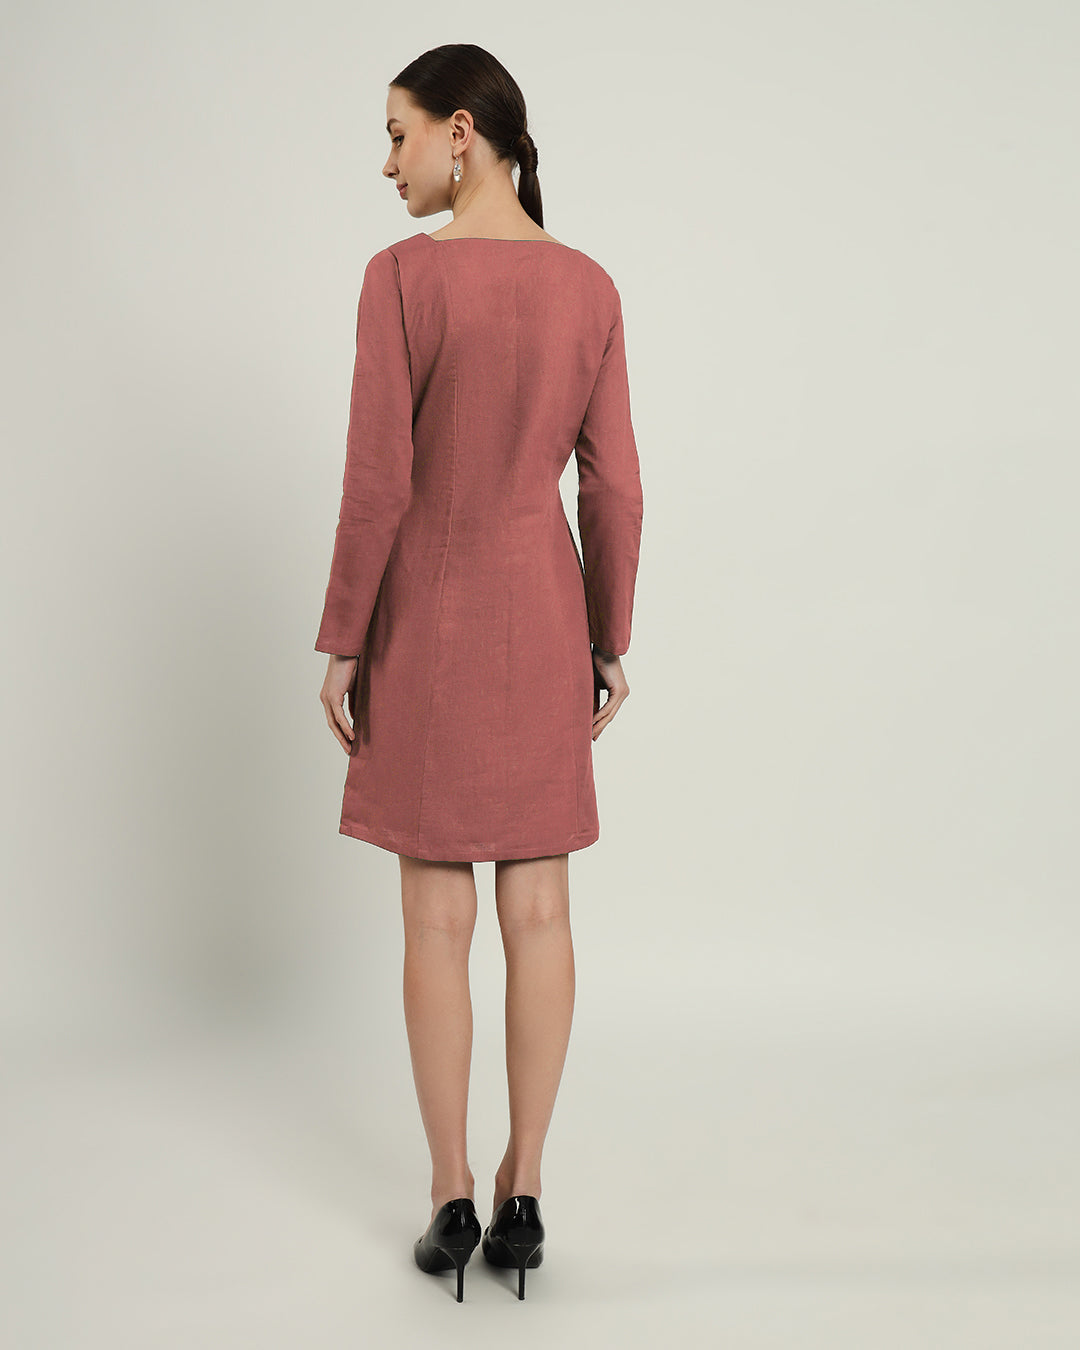 The Auburn Ivory Pink Cotton Dress